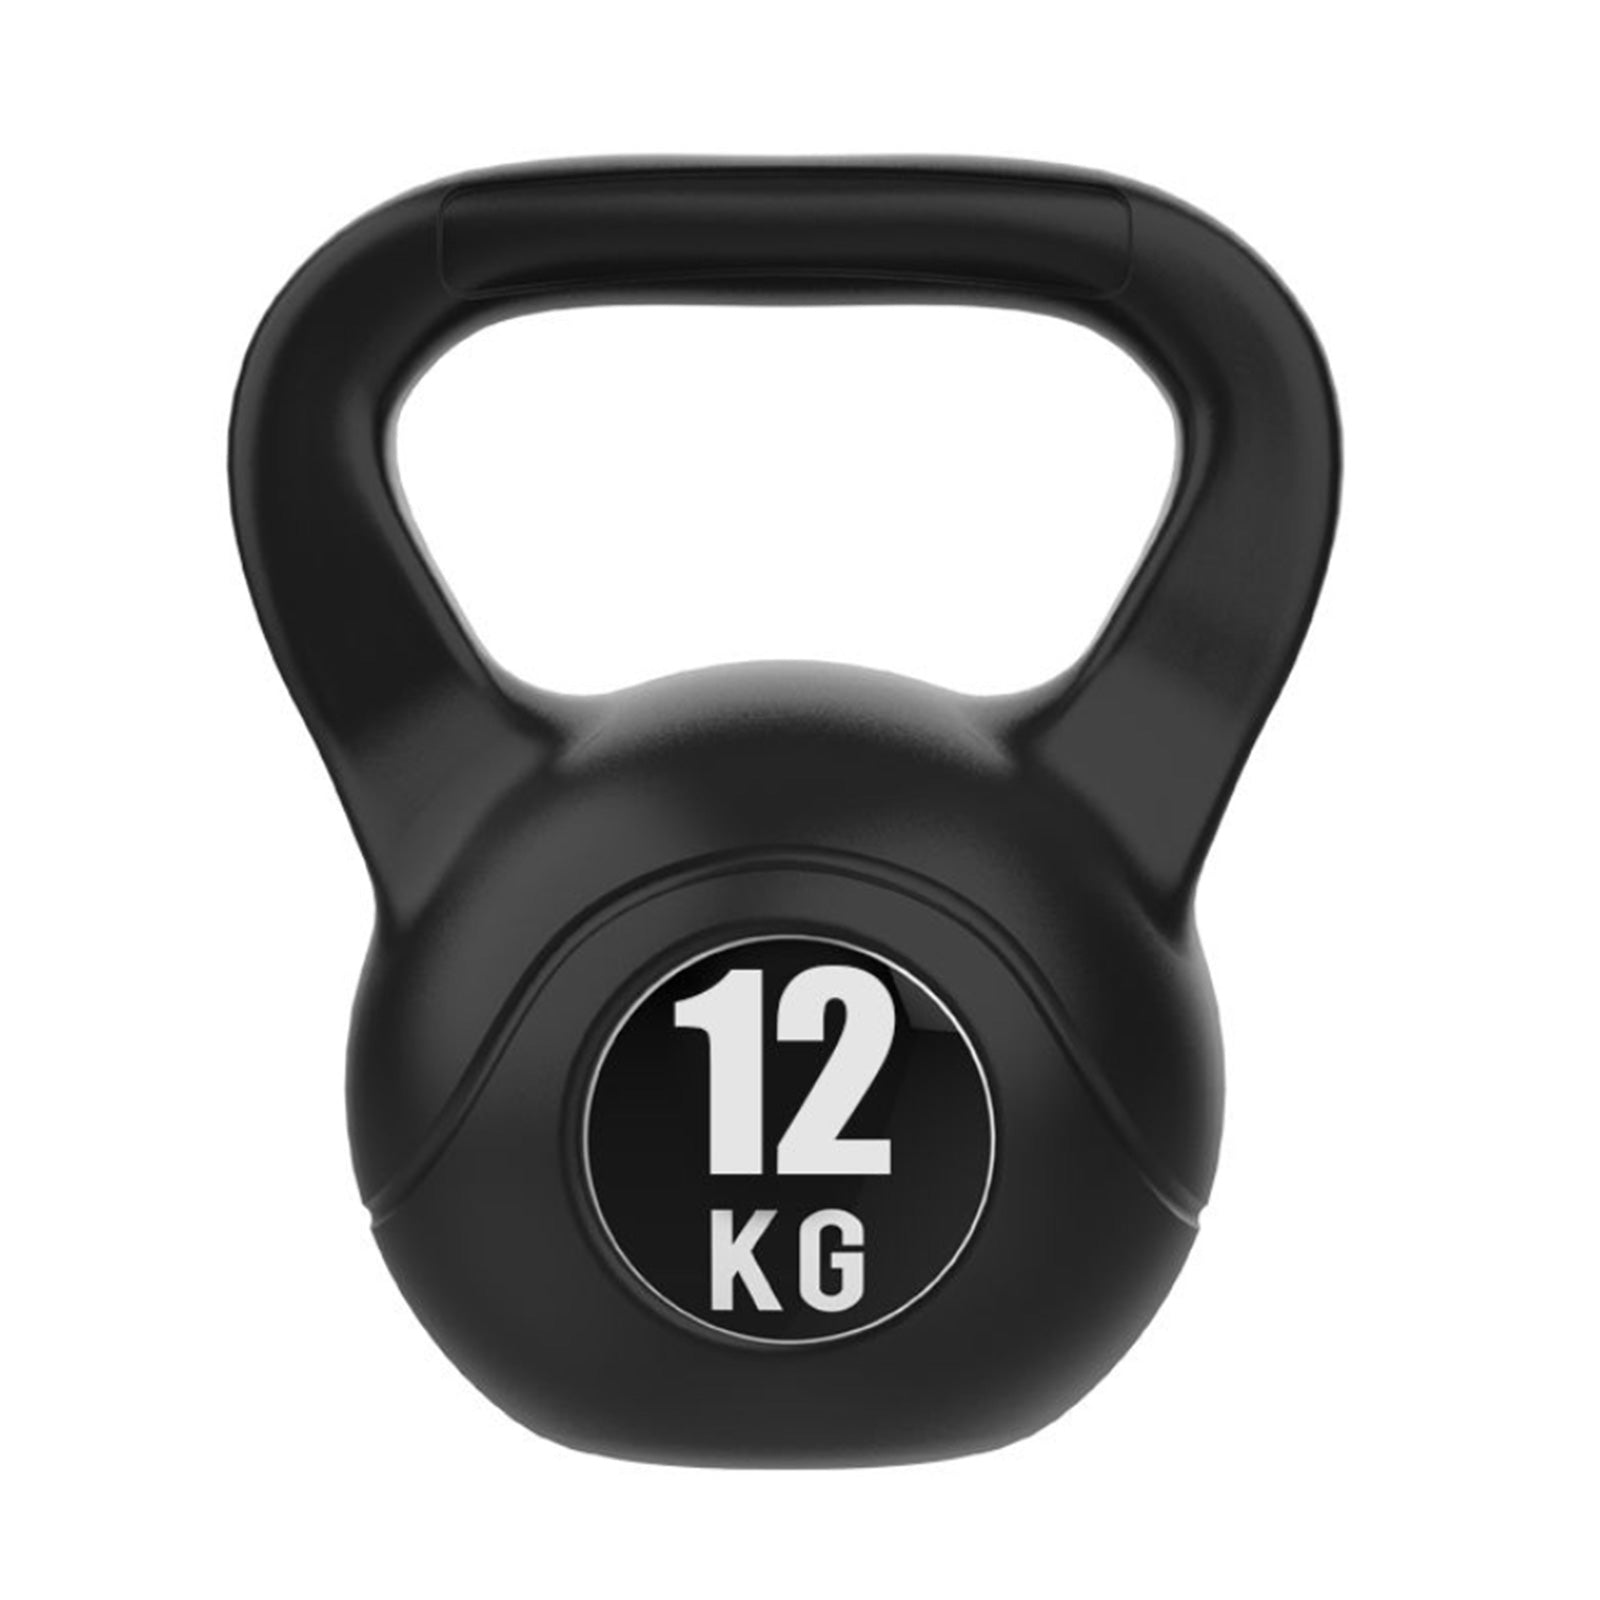 JMQ 4-12KG Kettlebell Kettle Bell Weight Exercise Home Gym Workout - 12KG